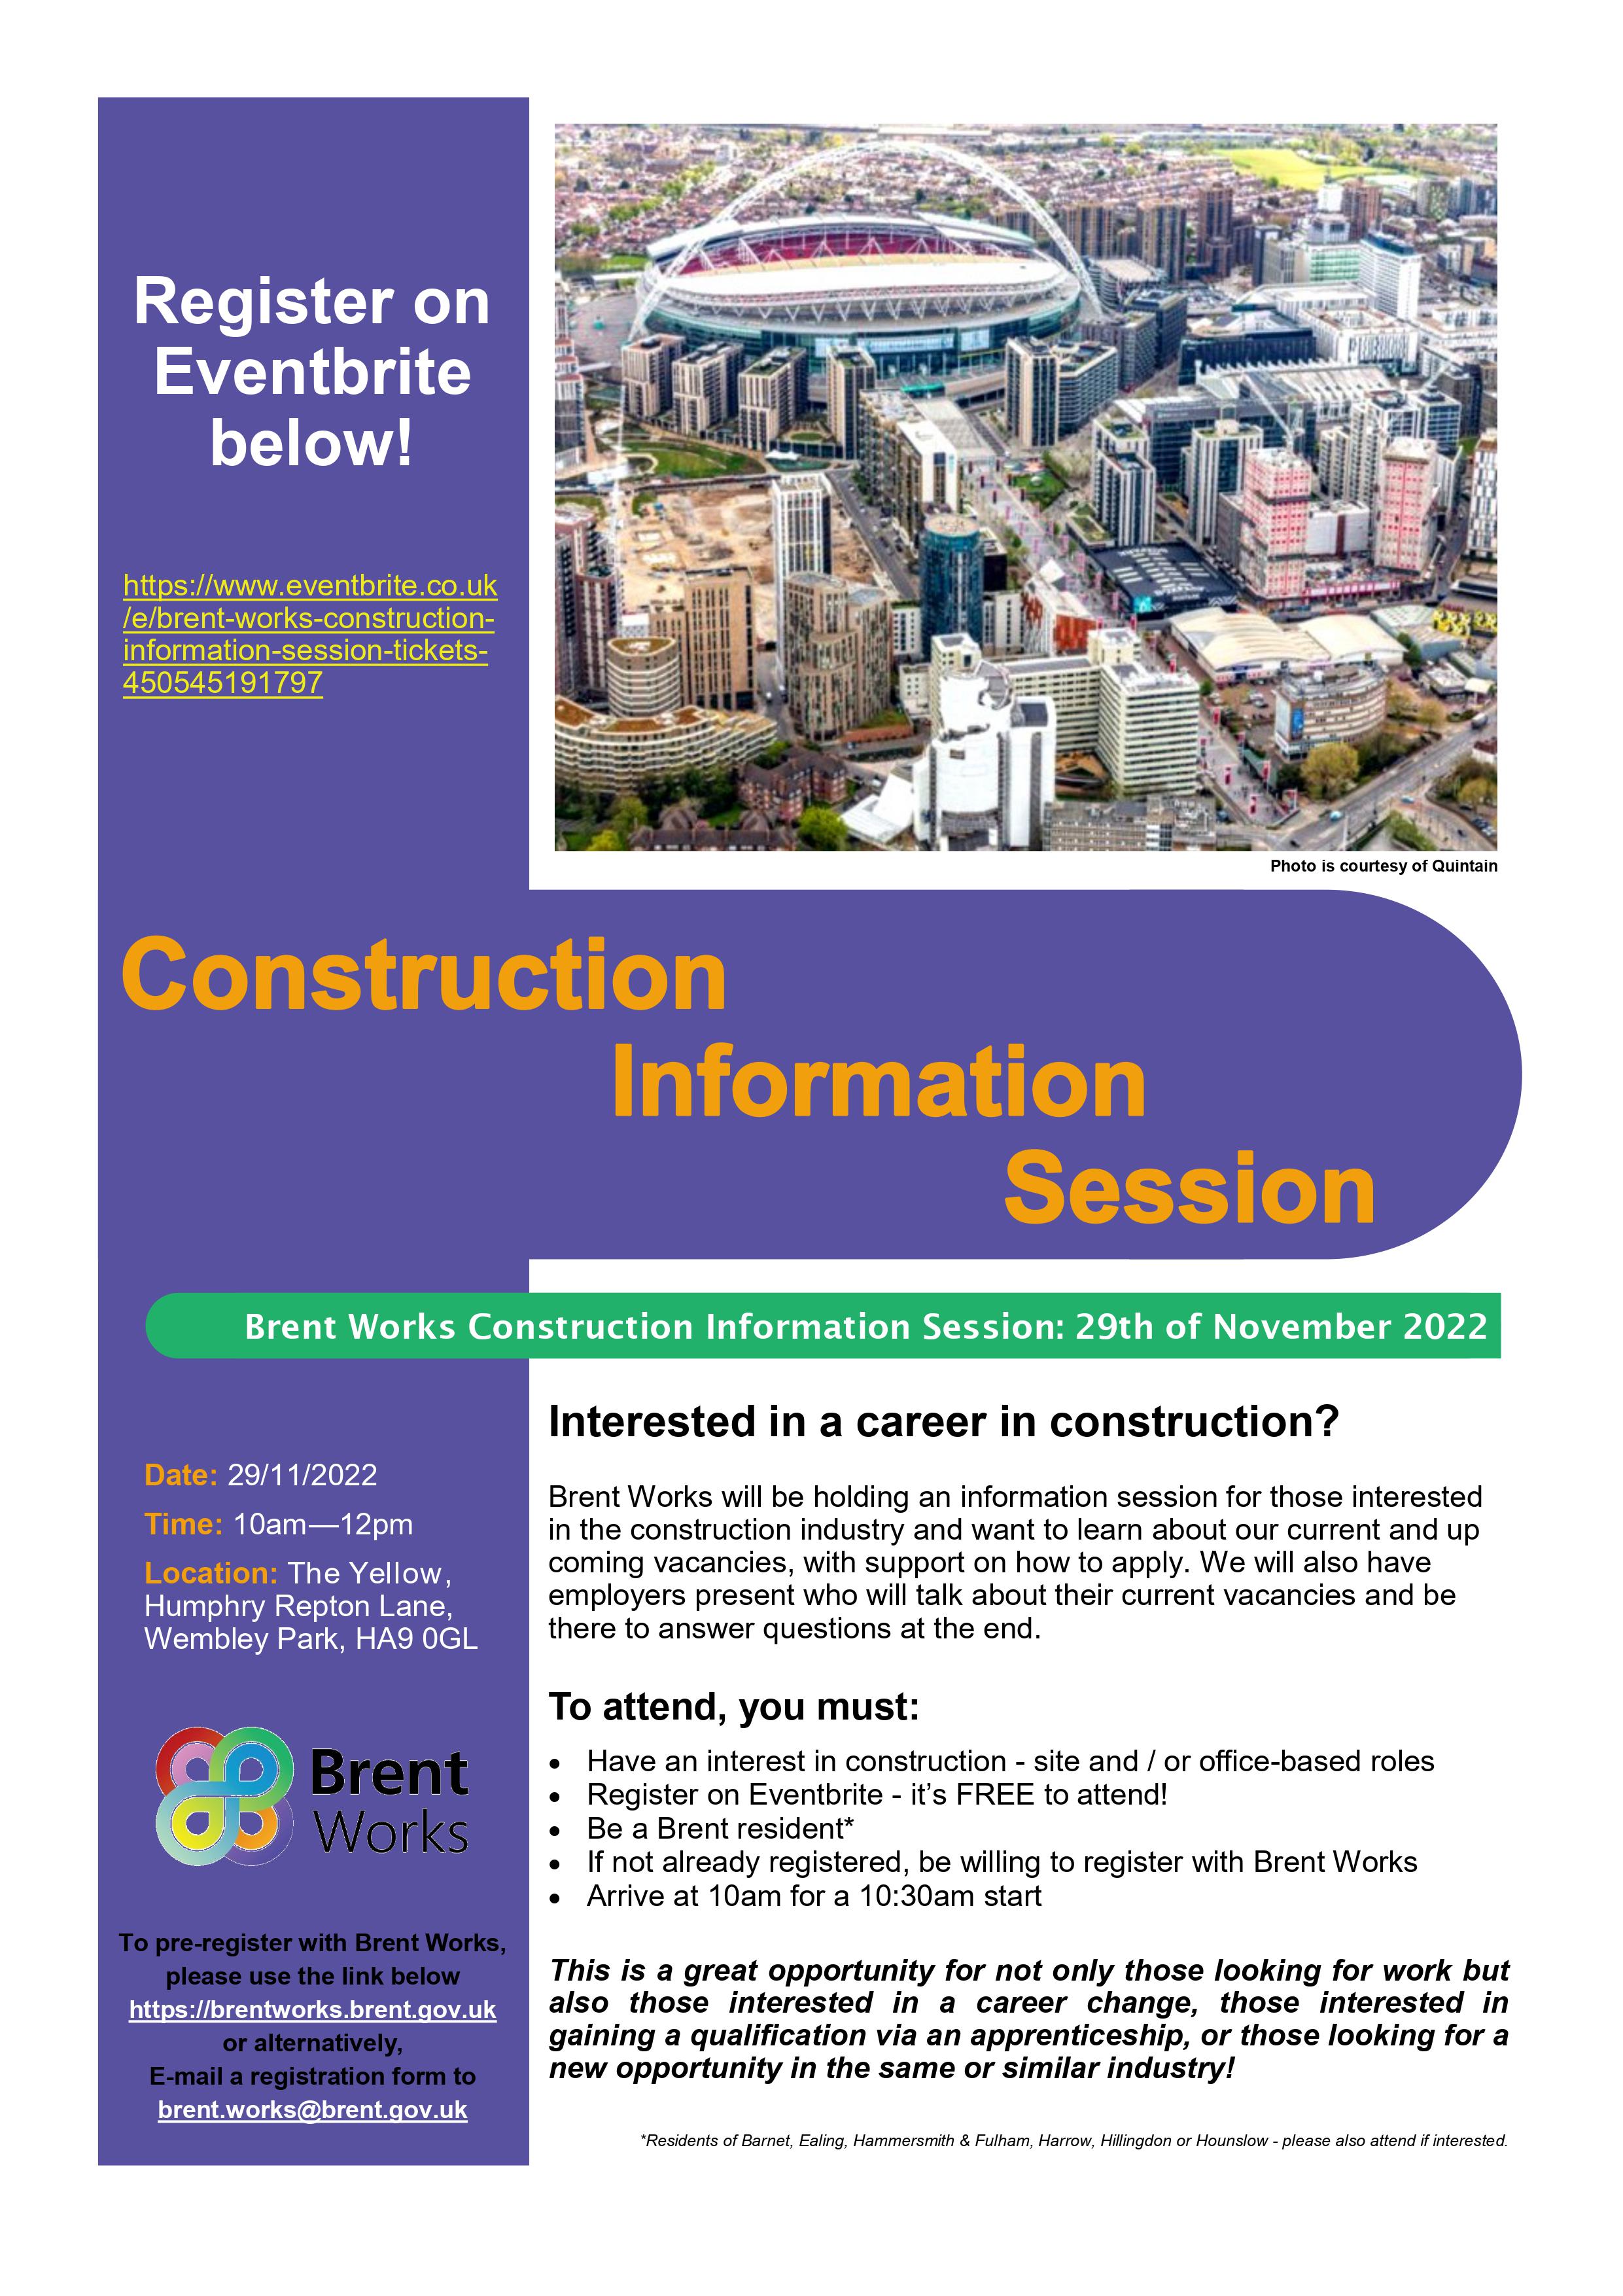 Brent Works Constuction Information Session Image